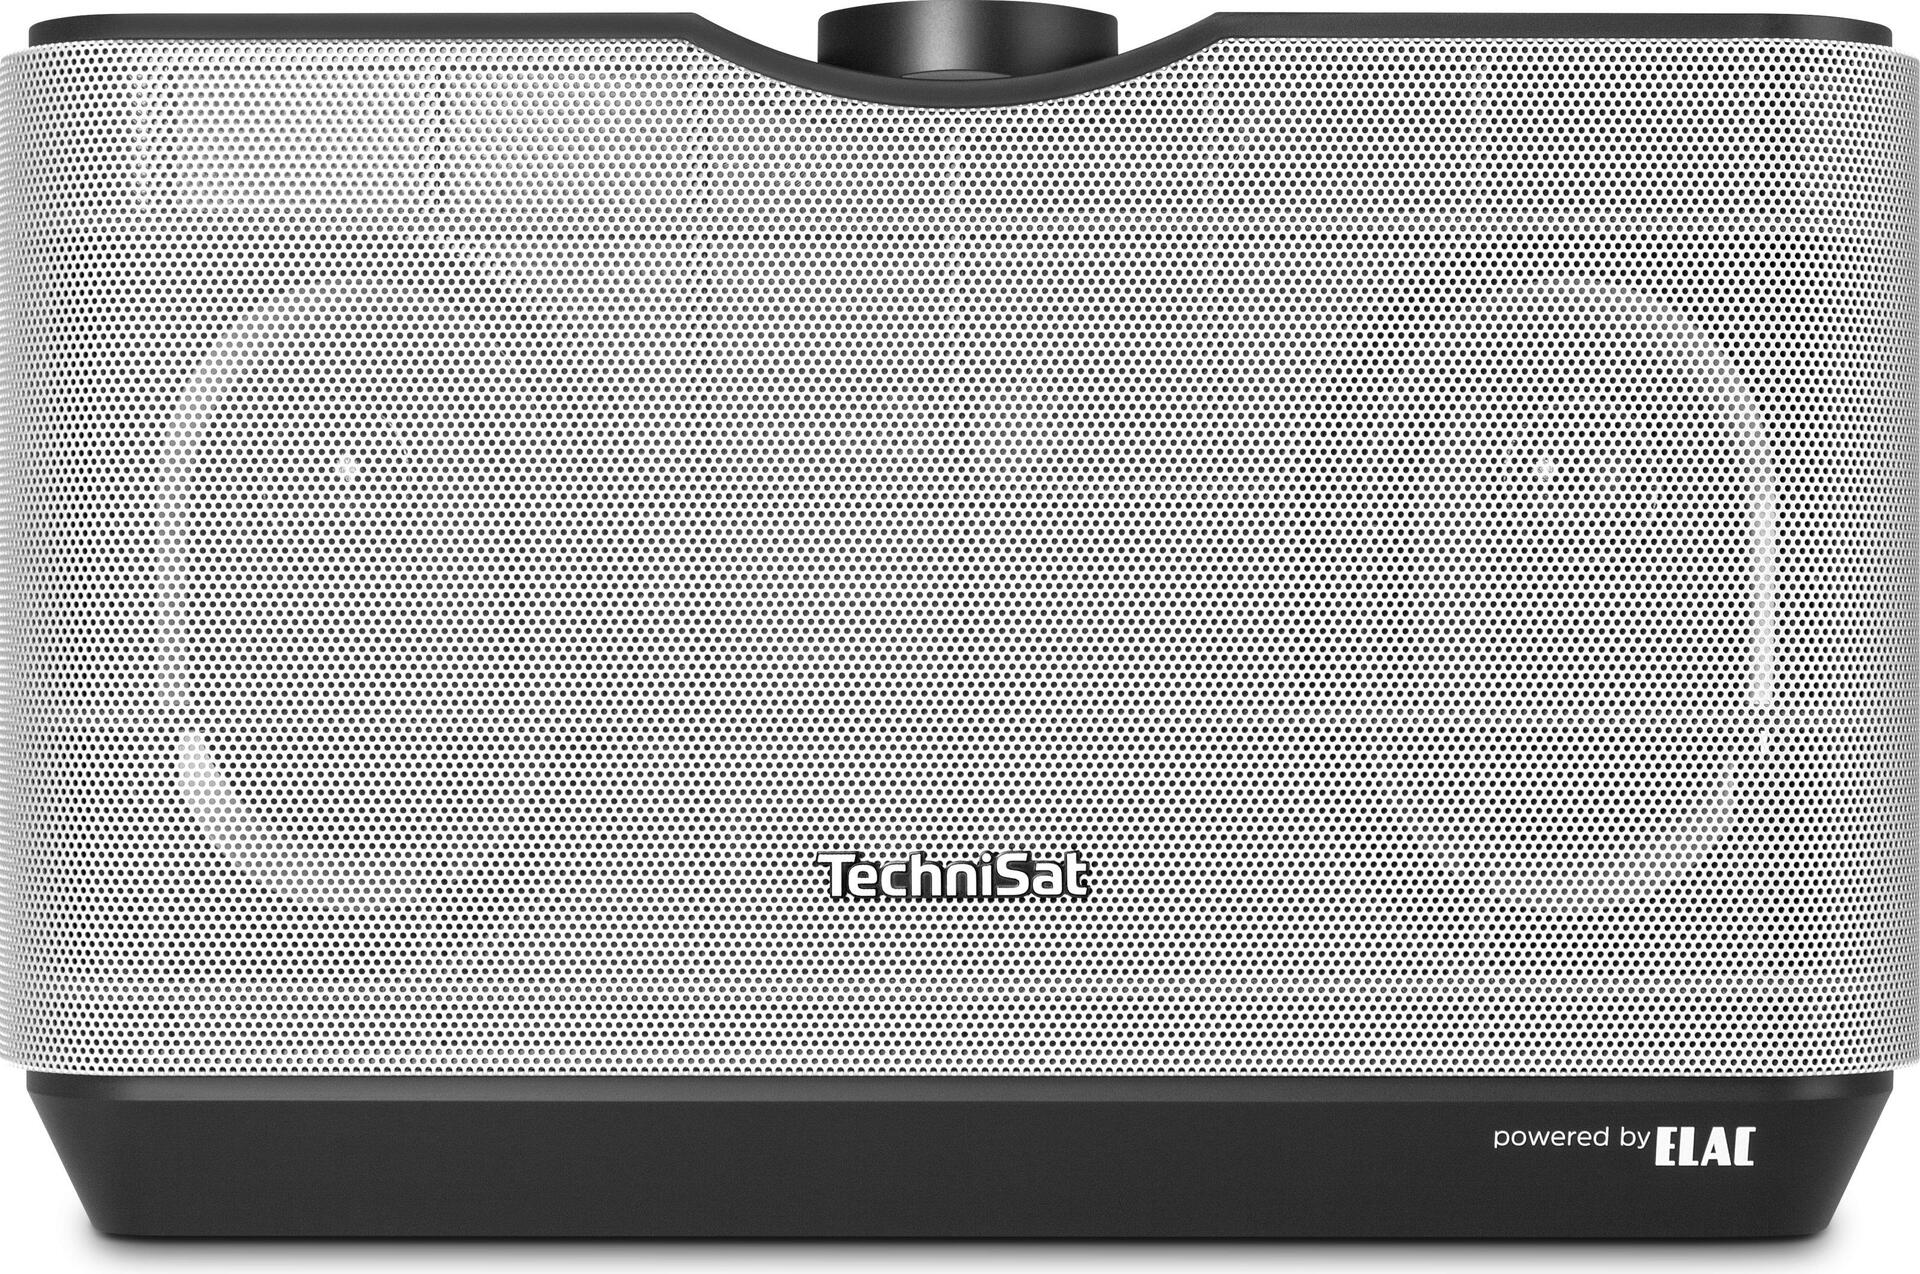 TECHNISAT AudioMaster MR2 Wlan Bluetooth Stereo Multiroom (powered by ELAC)